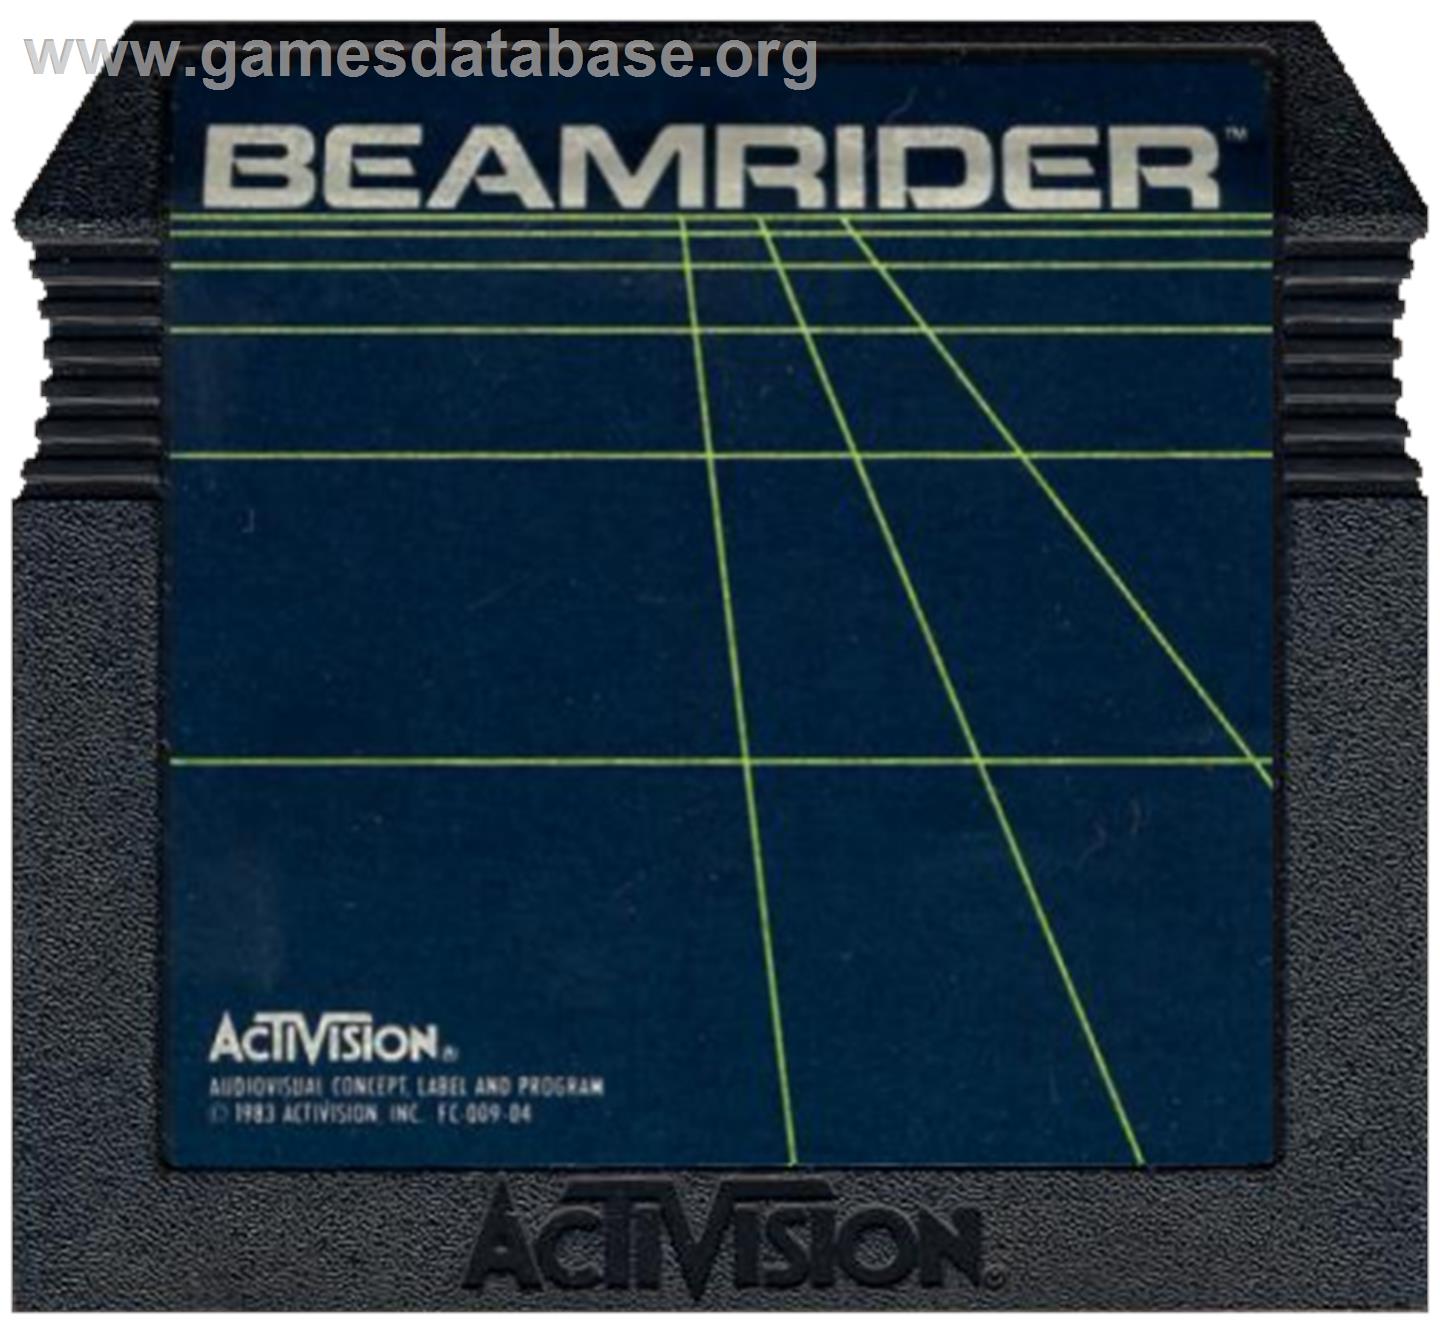 Beamrider - Atari 5200 - Artwork - Cartridge